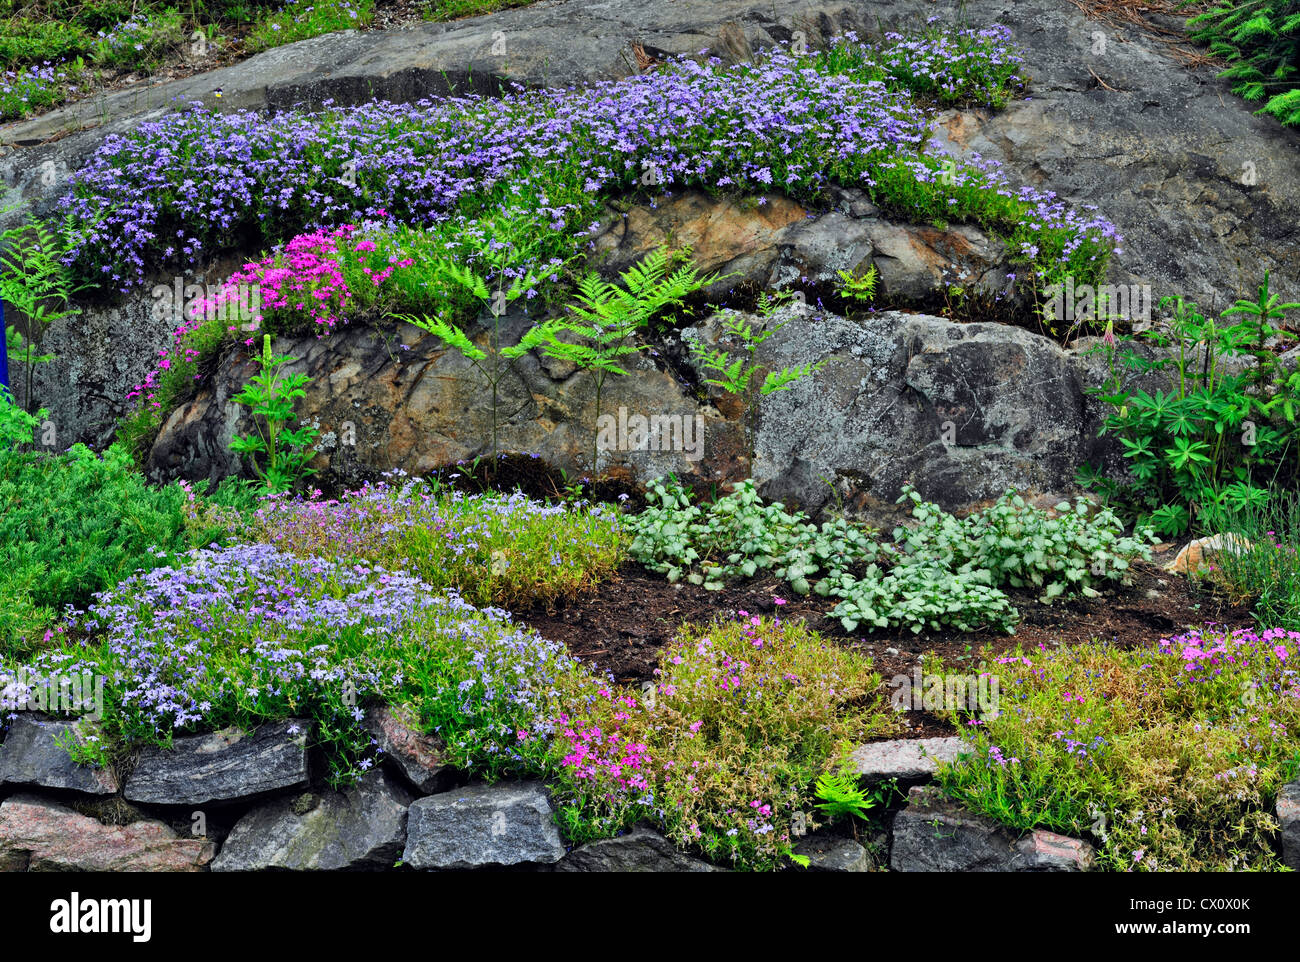 Rock garden with creeping phlox and bracken fern, Greater Sudbury, Ontario, Canada Stock Photo